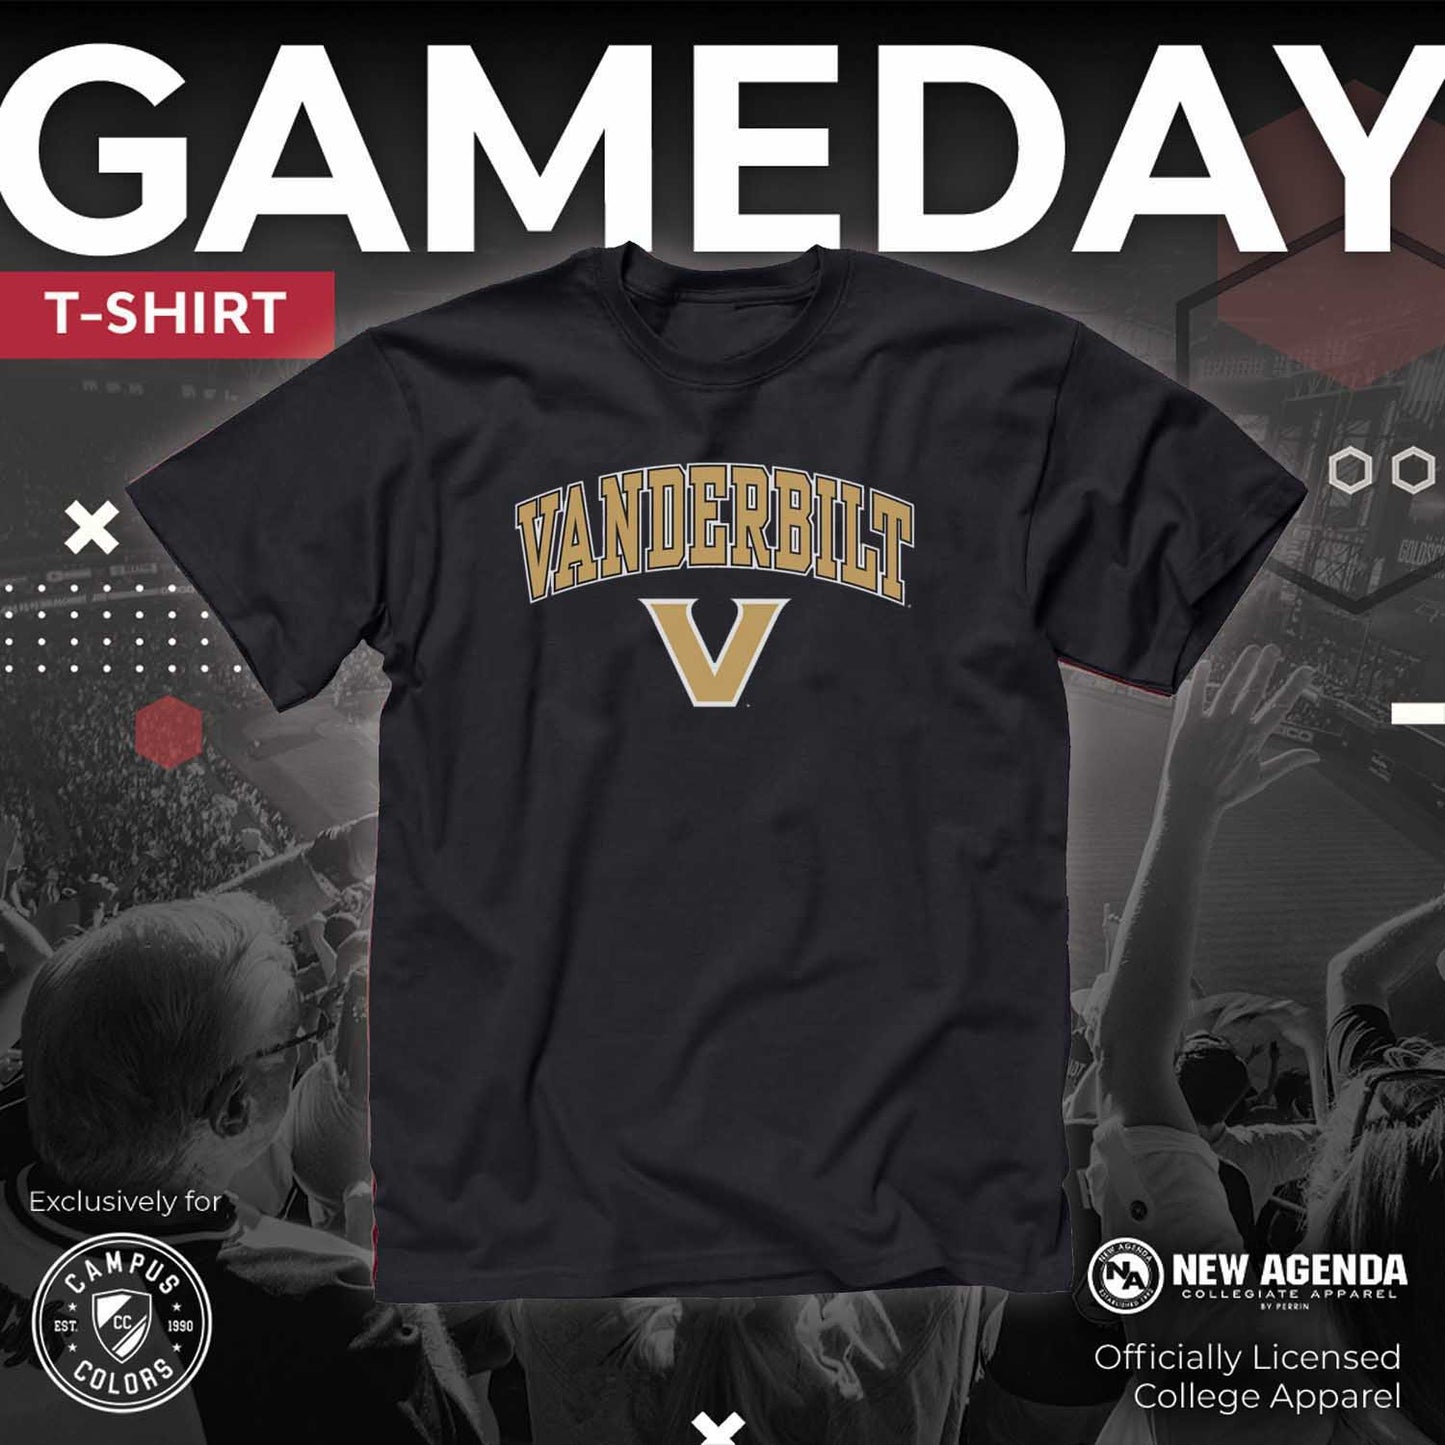 Vanderbilt Commodores NCAA Adult Gameday Cotton T-Shirt - Black